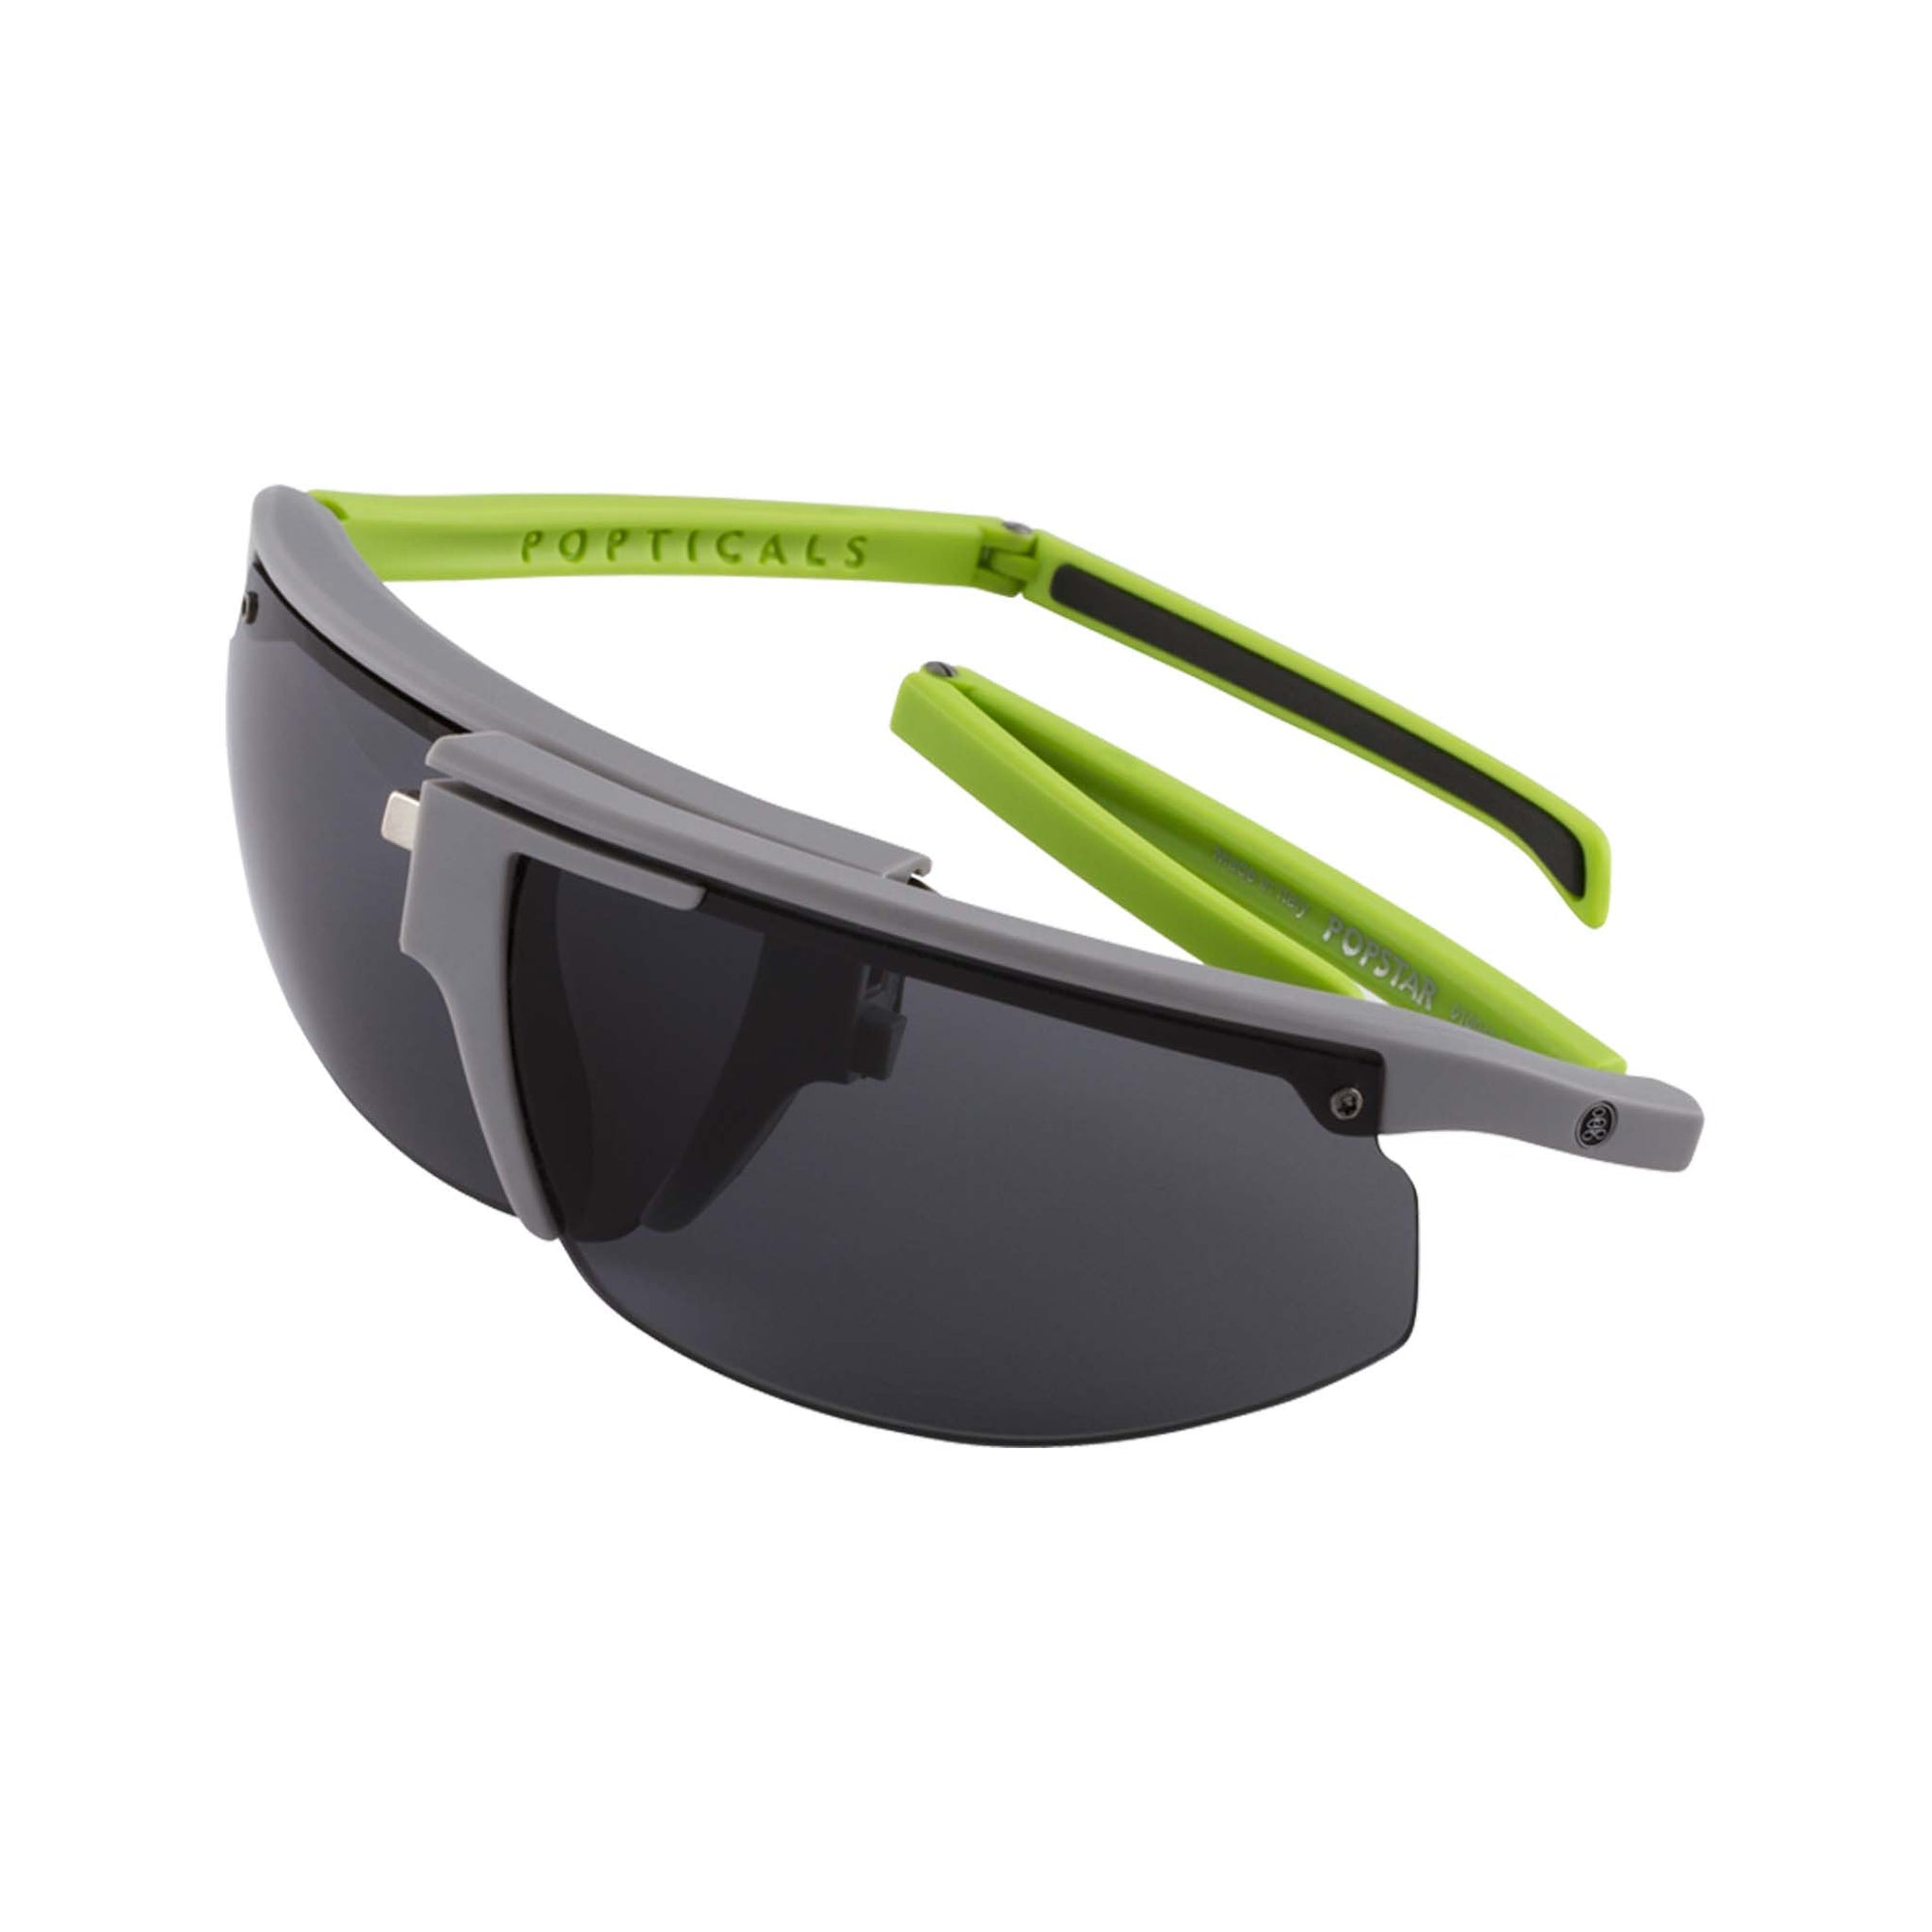 Popticals, Premium Compact Sunglasses, PopStar, 010040-EMGP, Polarized Sunglasses, Matte Gray/Green Frame, Gray Lenses, Spider View